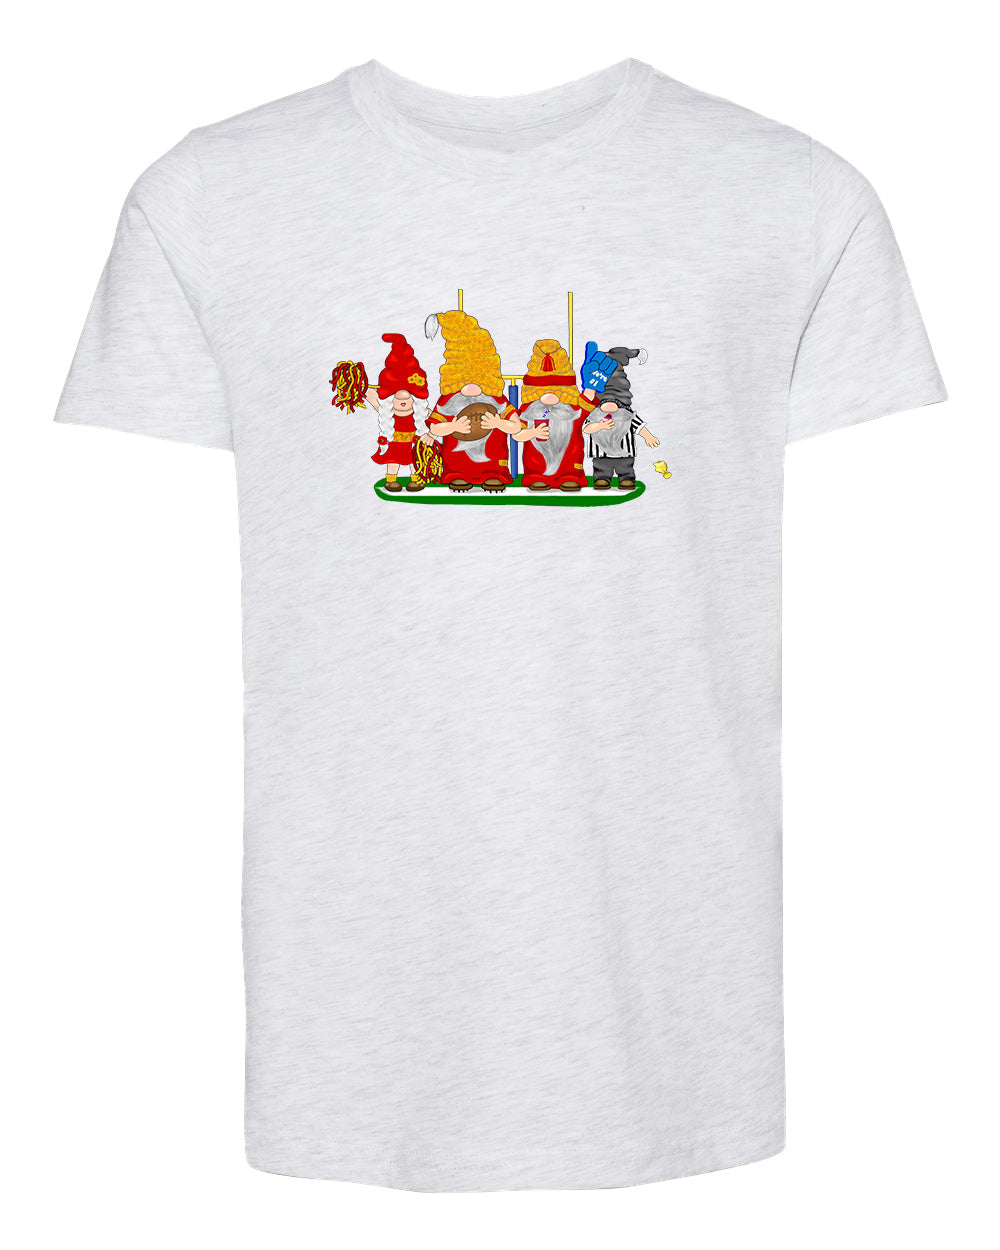 Red & Gold Football Gnomes  (similar to Kansas City) on Kids T-shirt